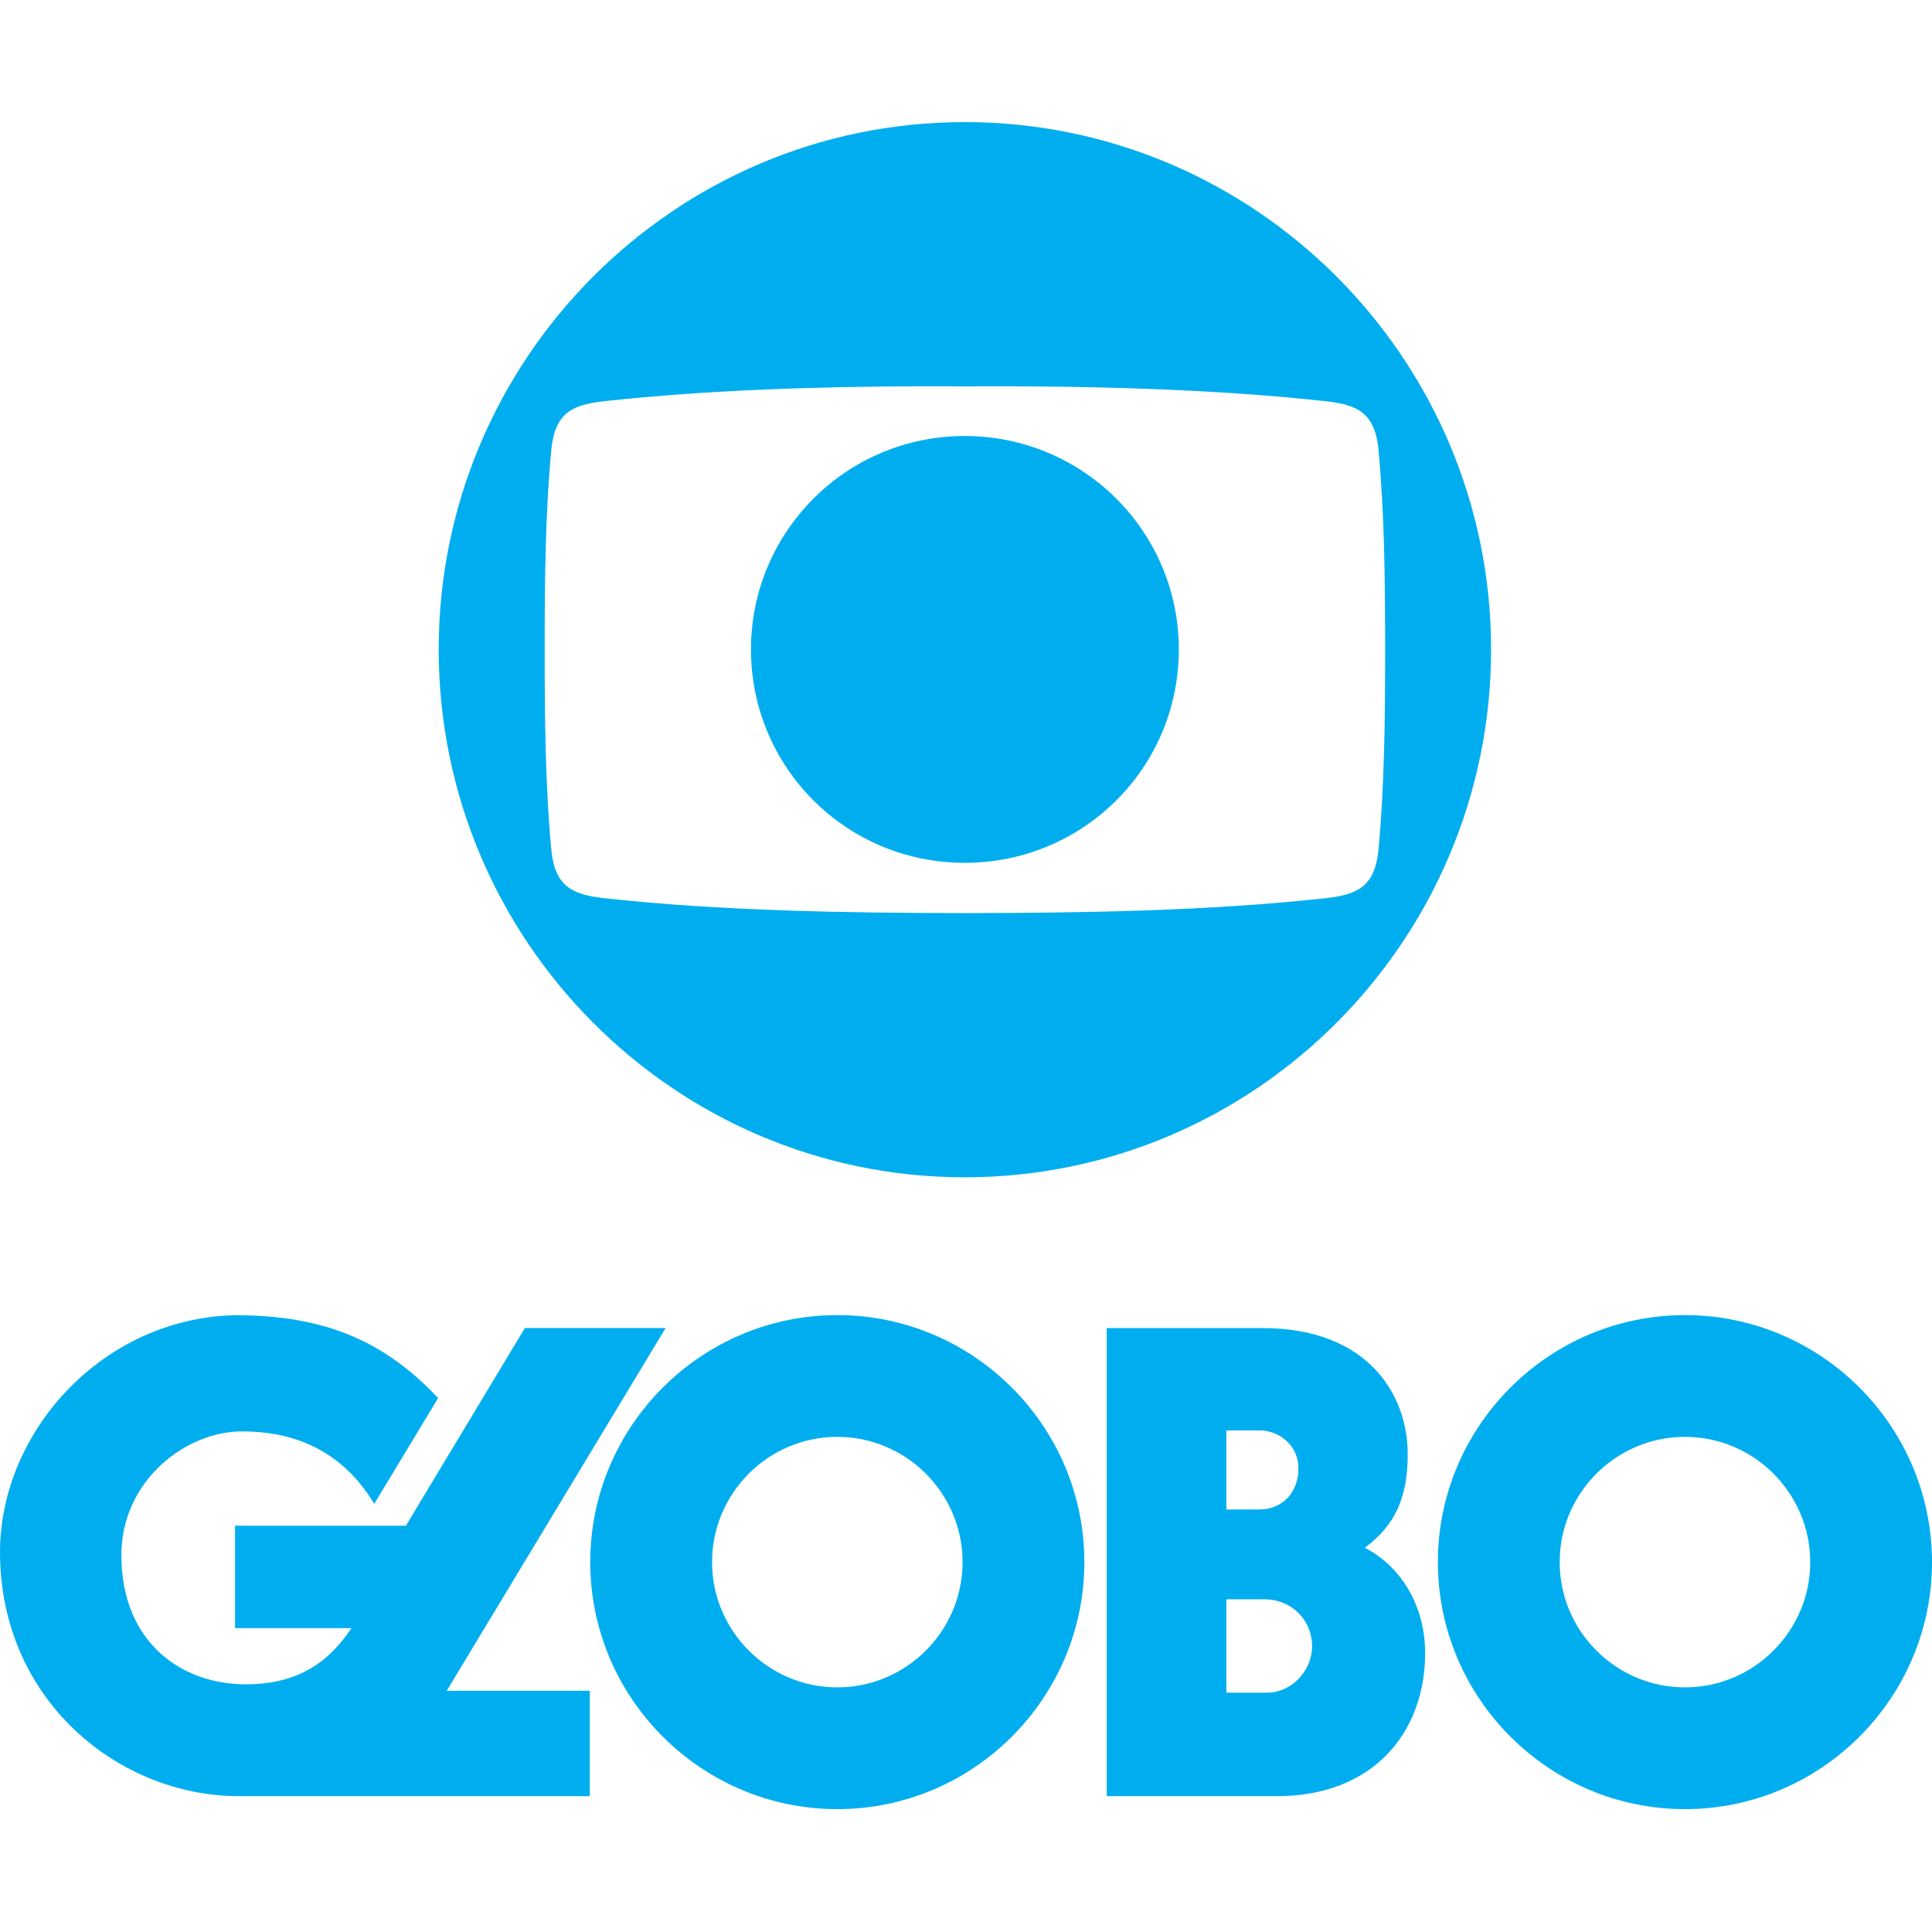 Rede Globo Logo Transparent Image